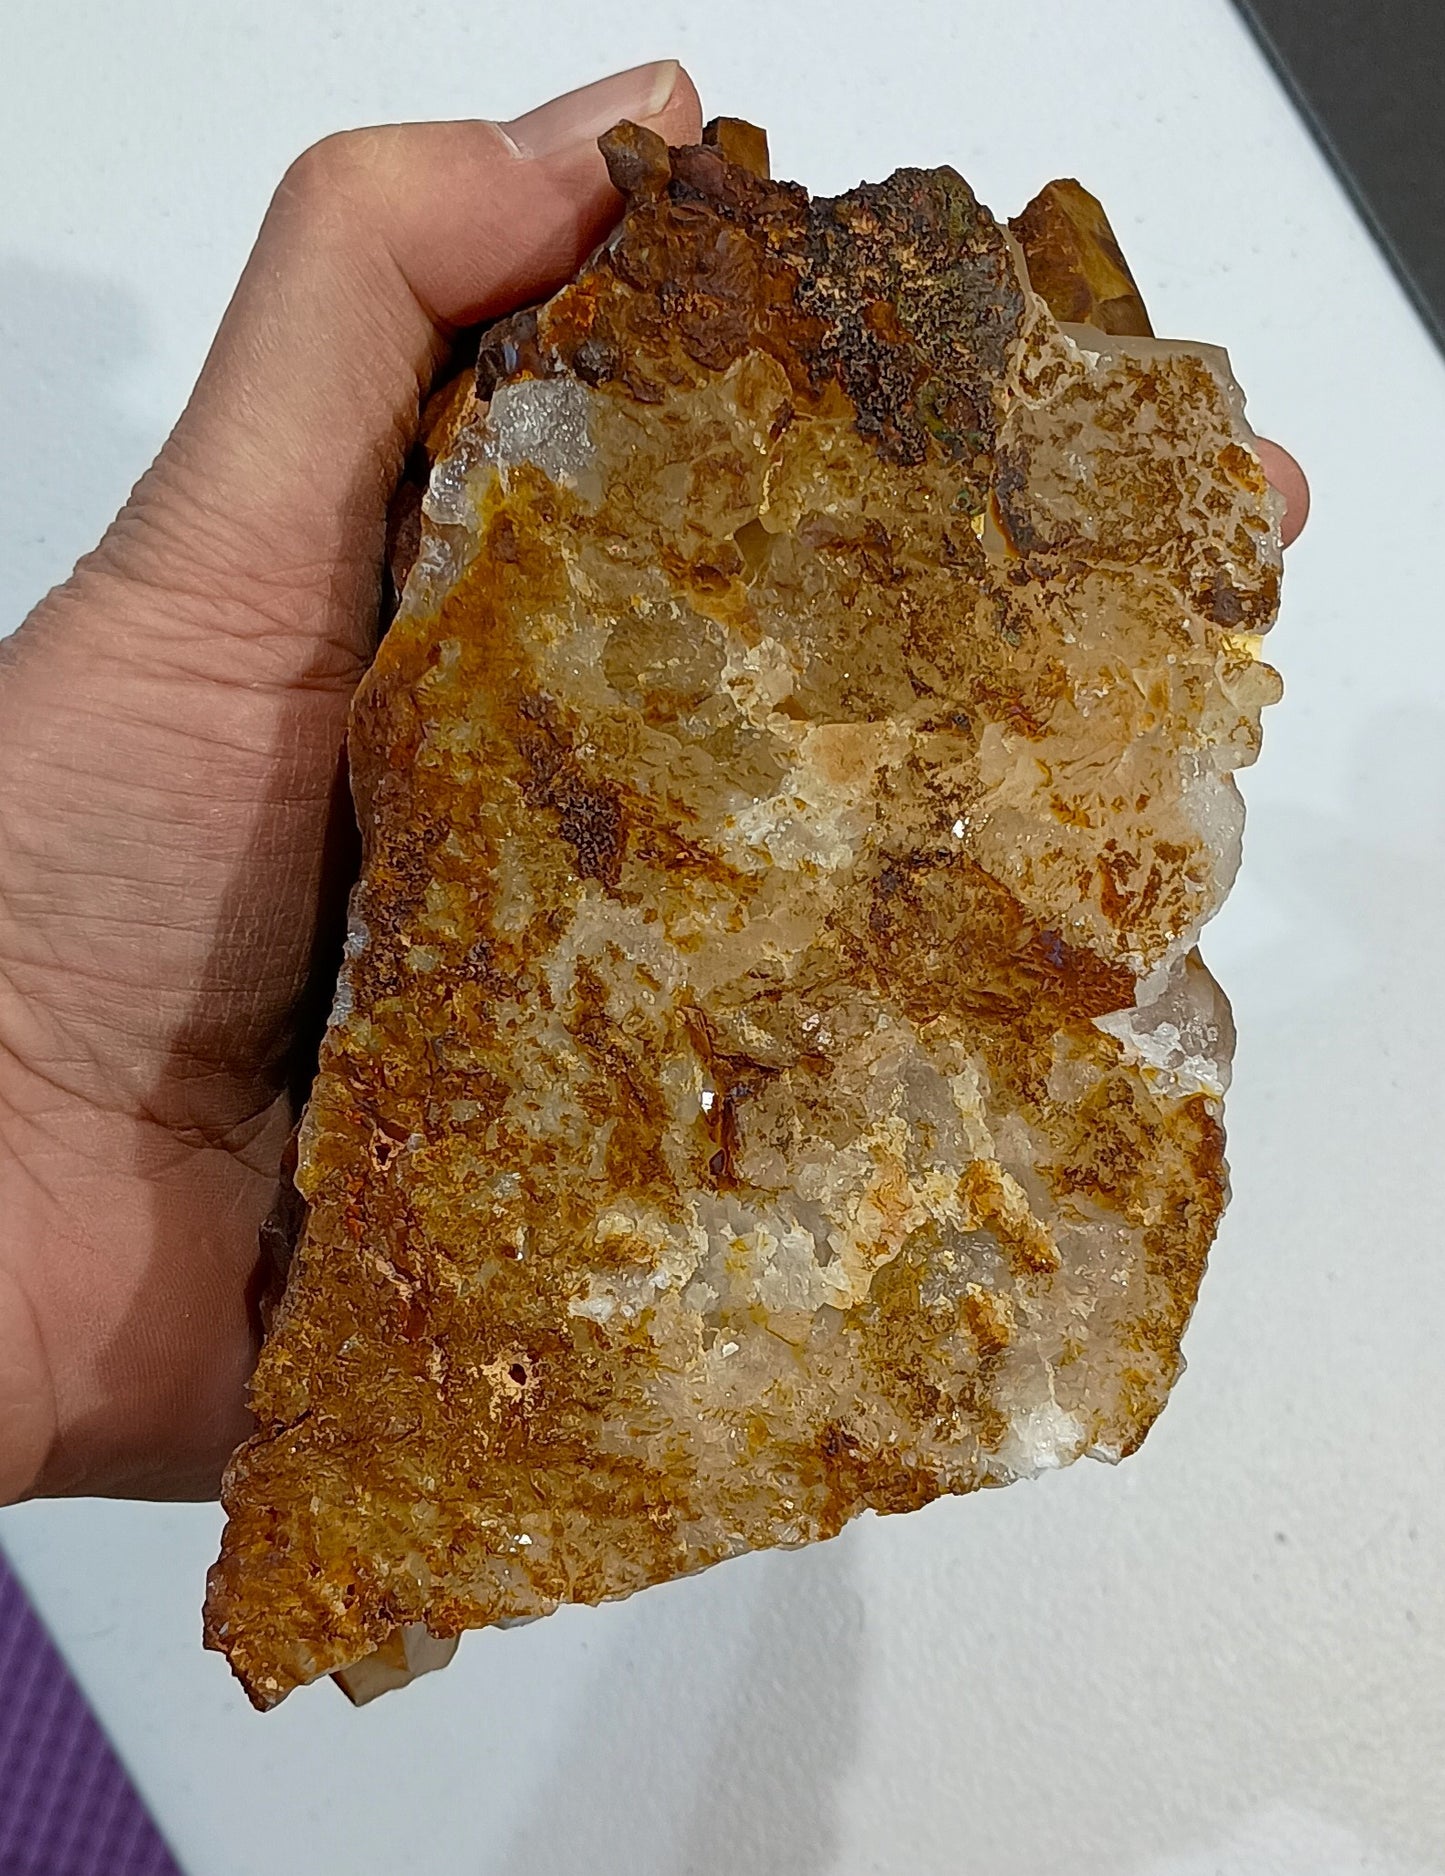 Beautiful Iridescent Arkansas Quartz Crystal Cluster